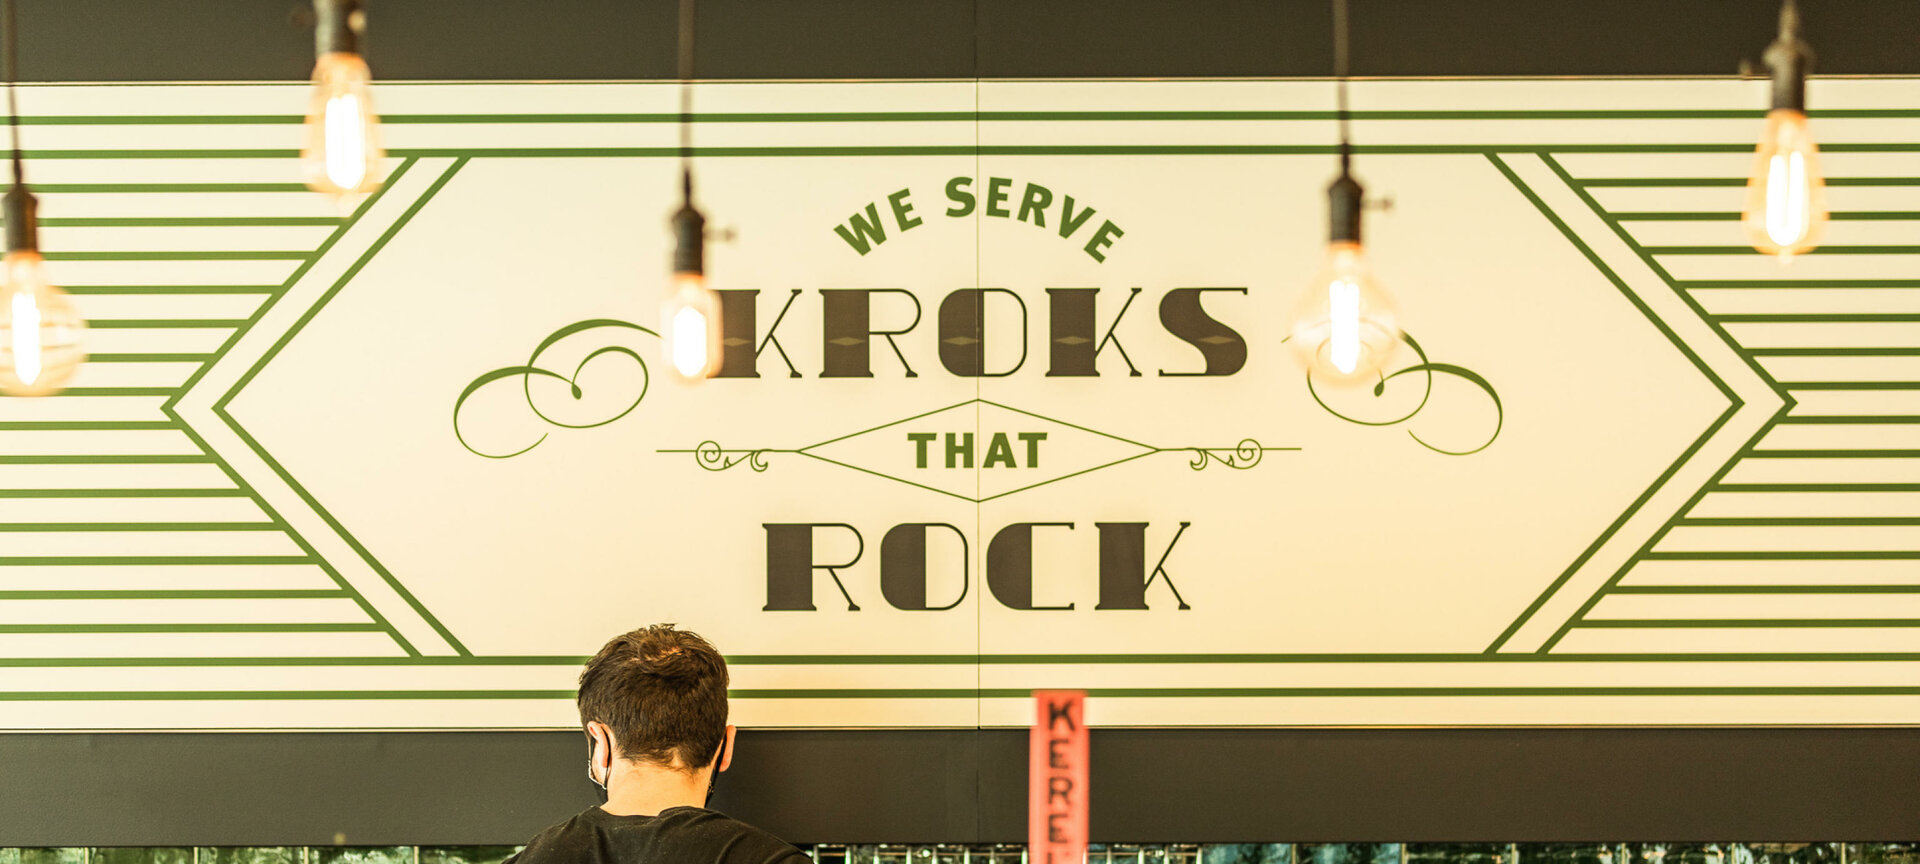 Krok Genk - kroks that rock